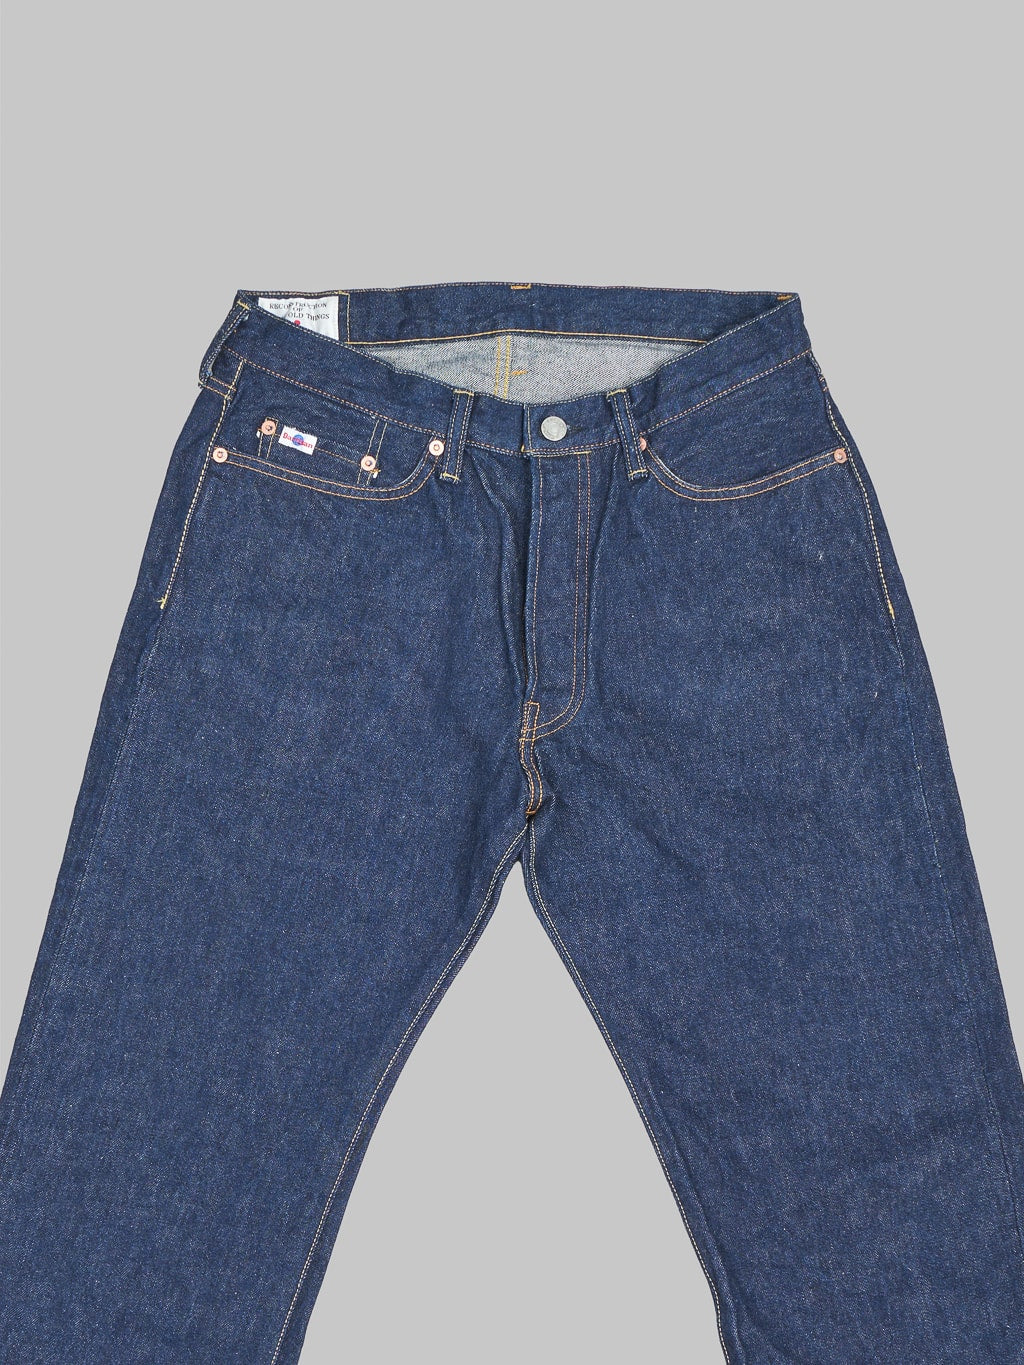 Studio D'Artisan SD-800 15oz Natural Indigo Tapered Jeans